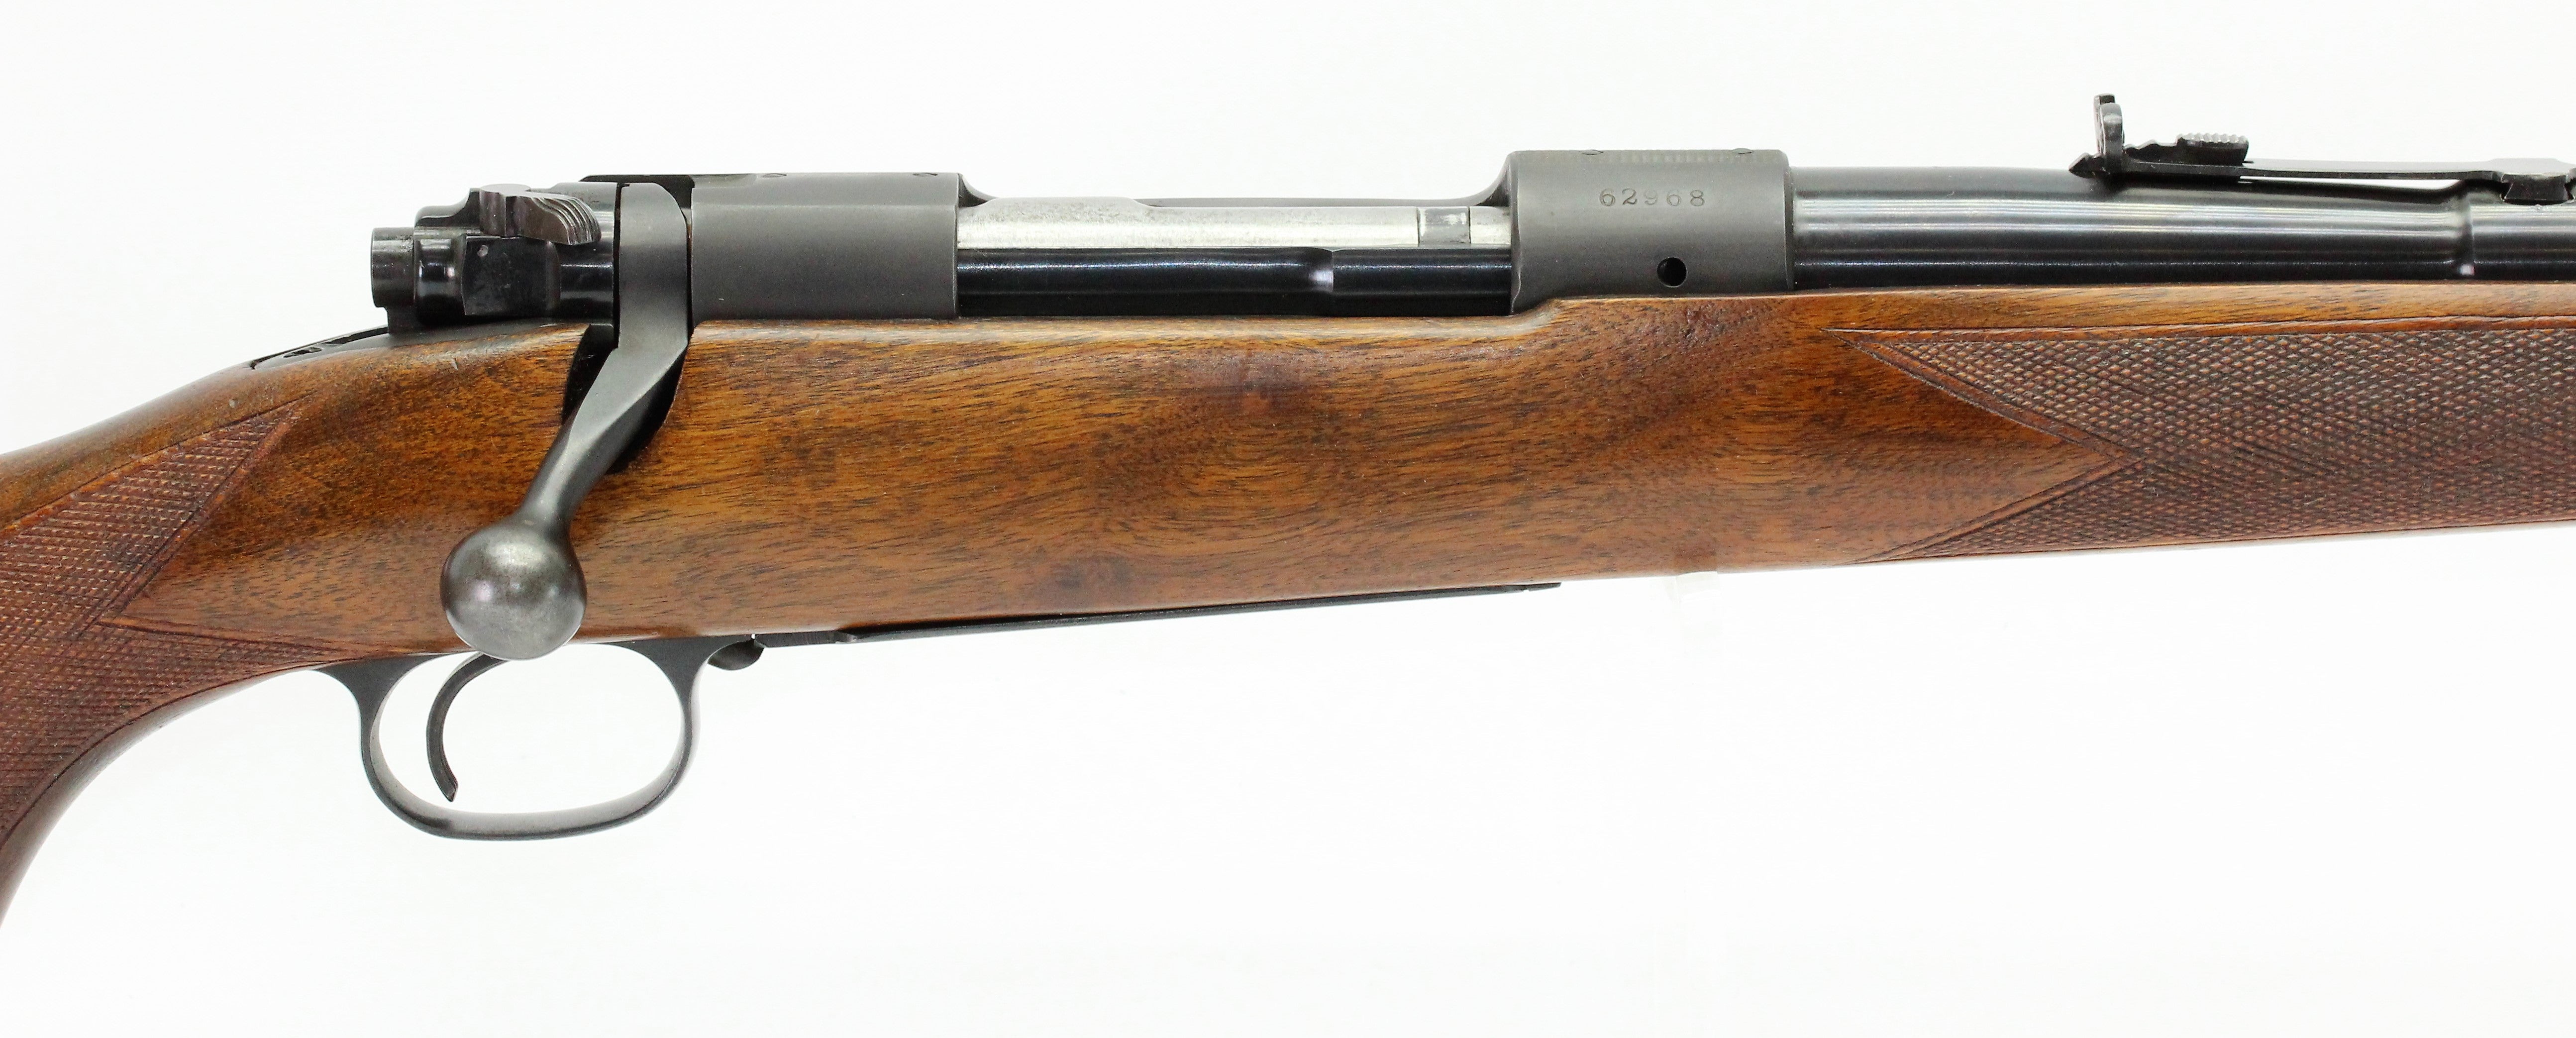 .30-06 Standard Rifle - 1947